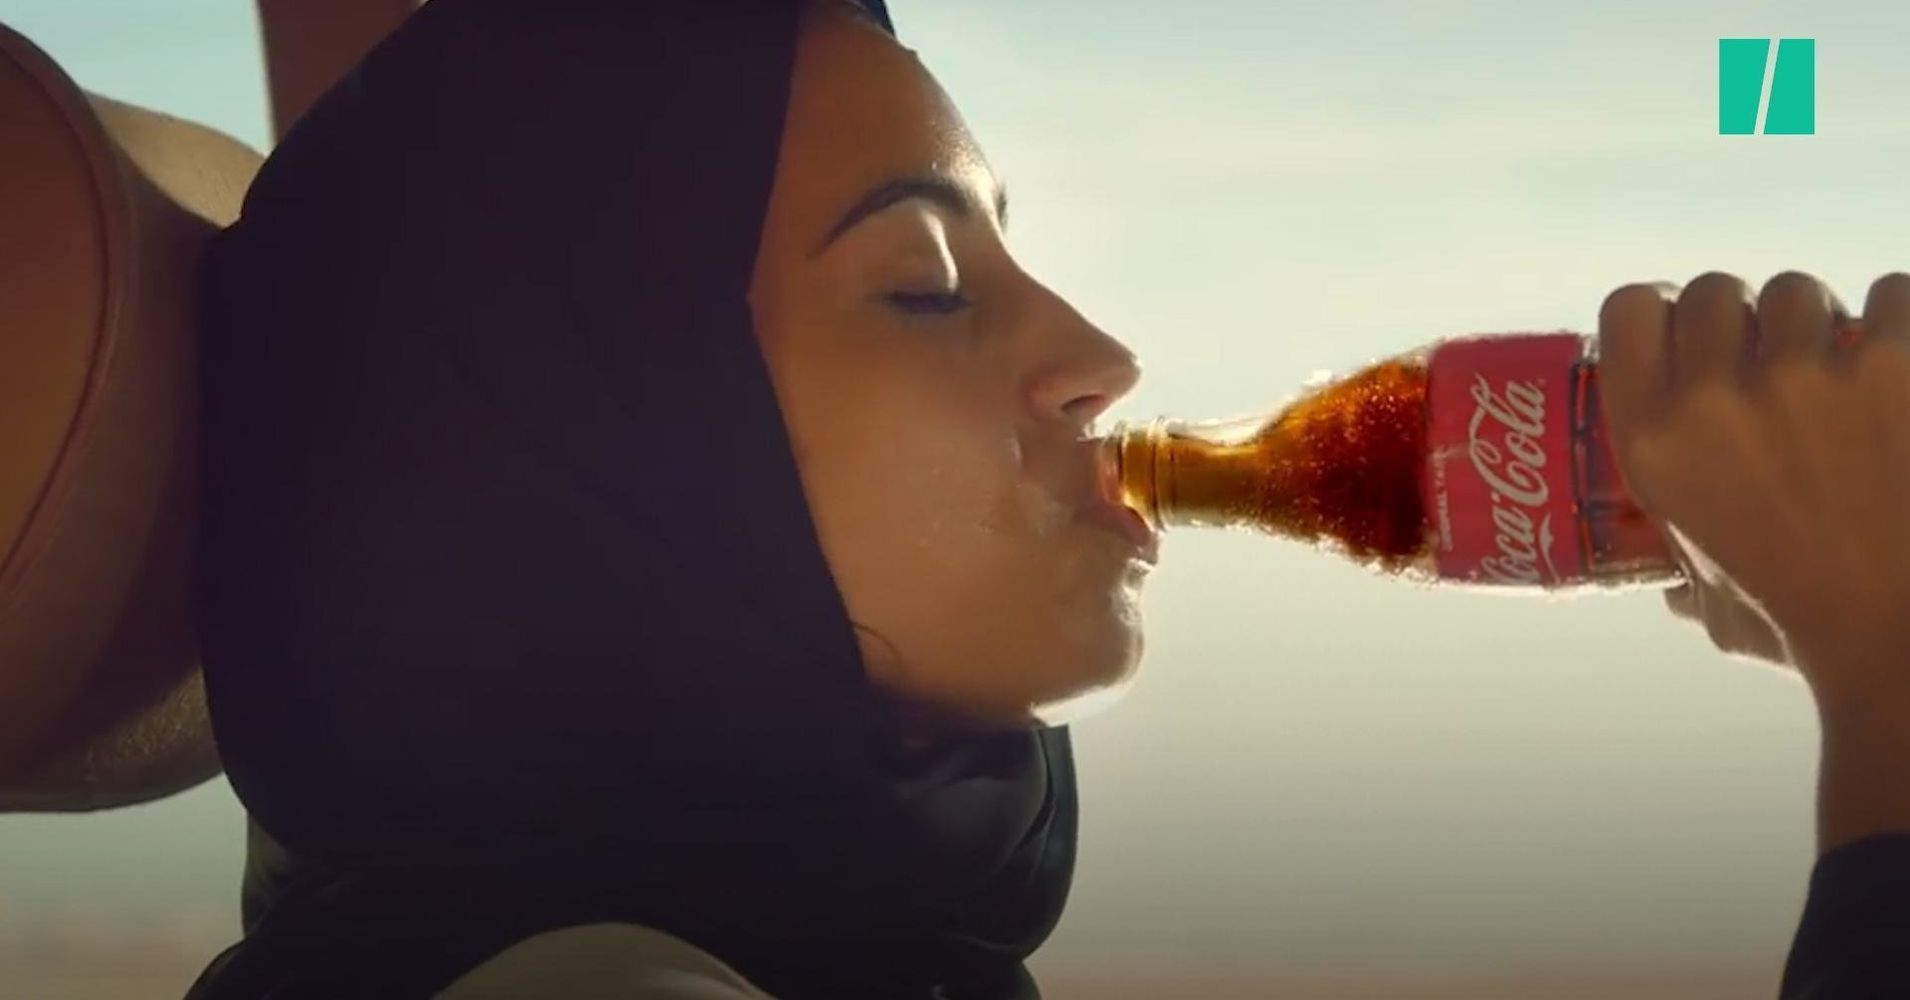 Saudi Coke Ad Stirs Up Controversy | HuffPost